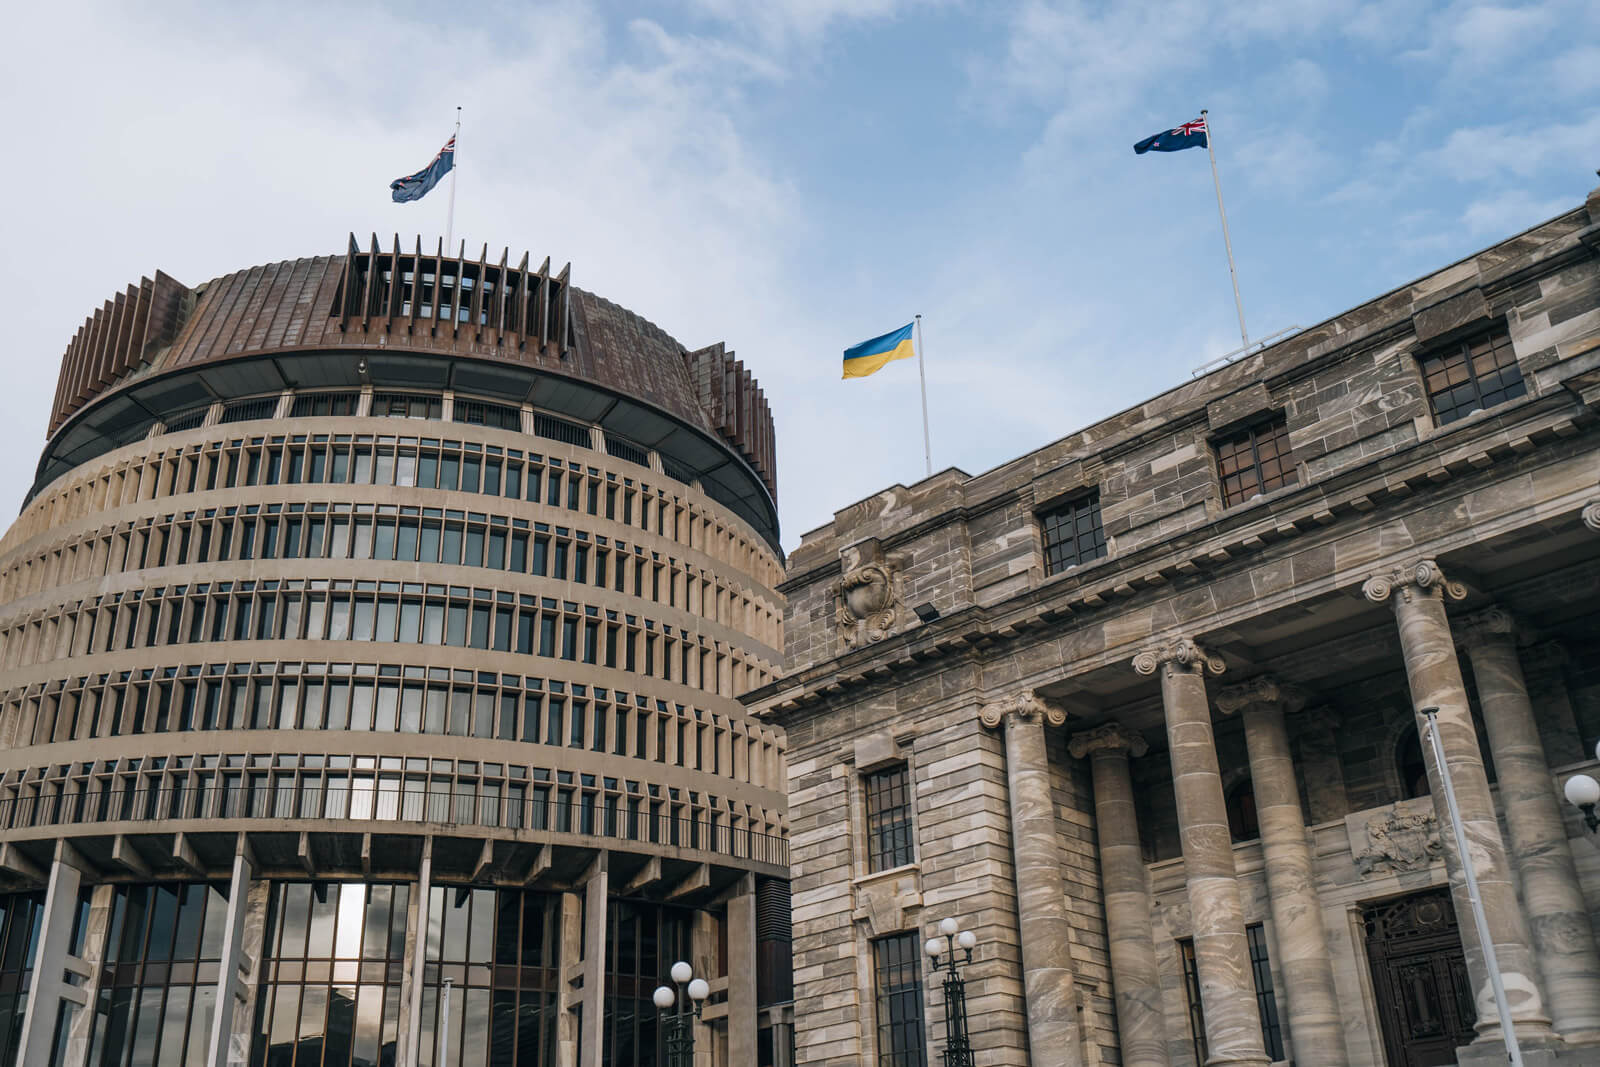 New Zealand Parlament - Beehive Building